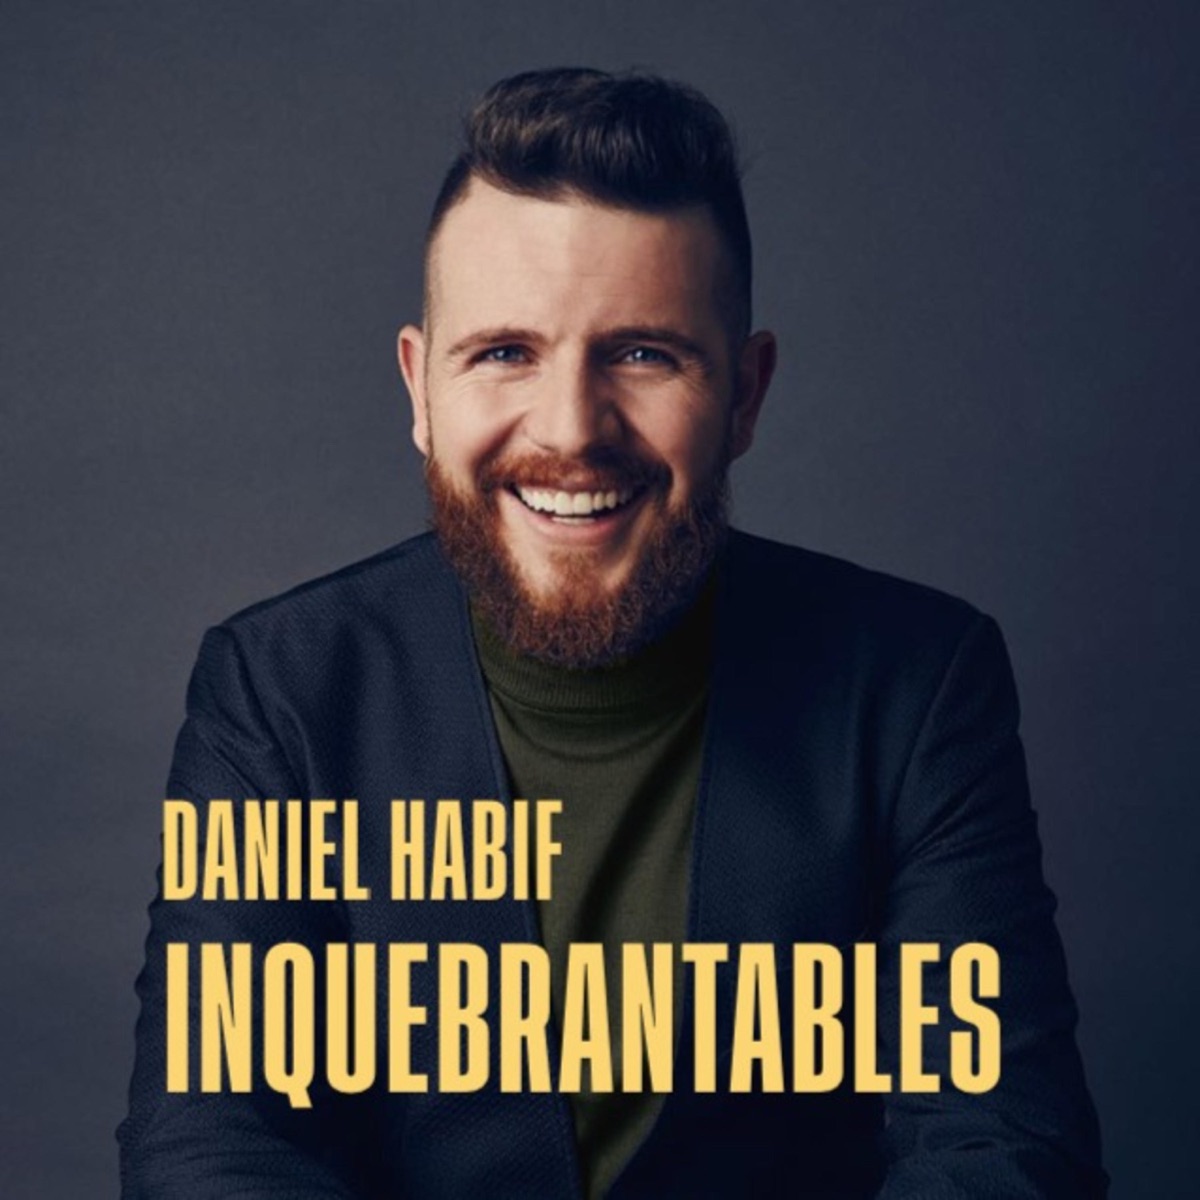 Daniel Habif Inquebrantables Lyssna Har Podtail 5 min i 11 sek. podtail